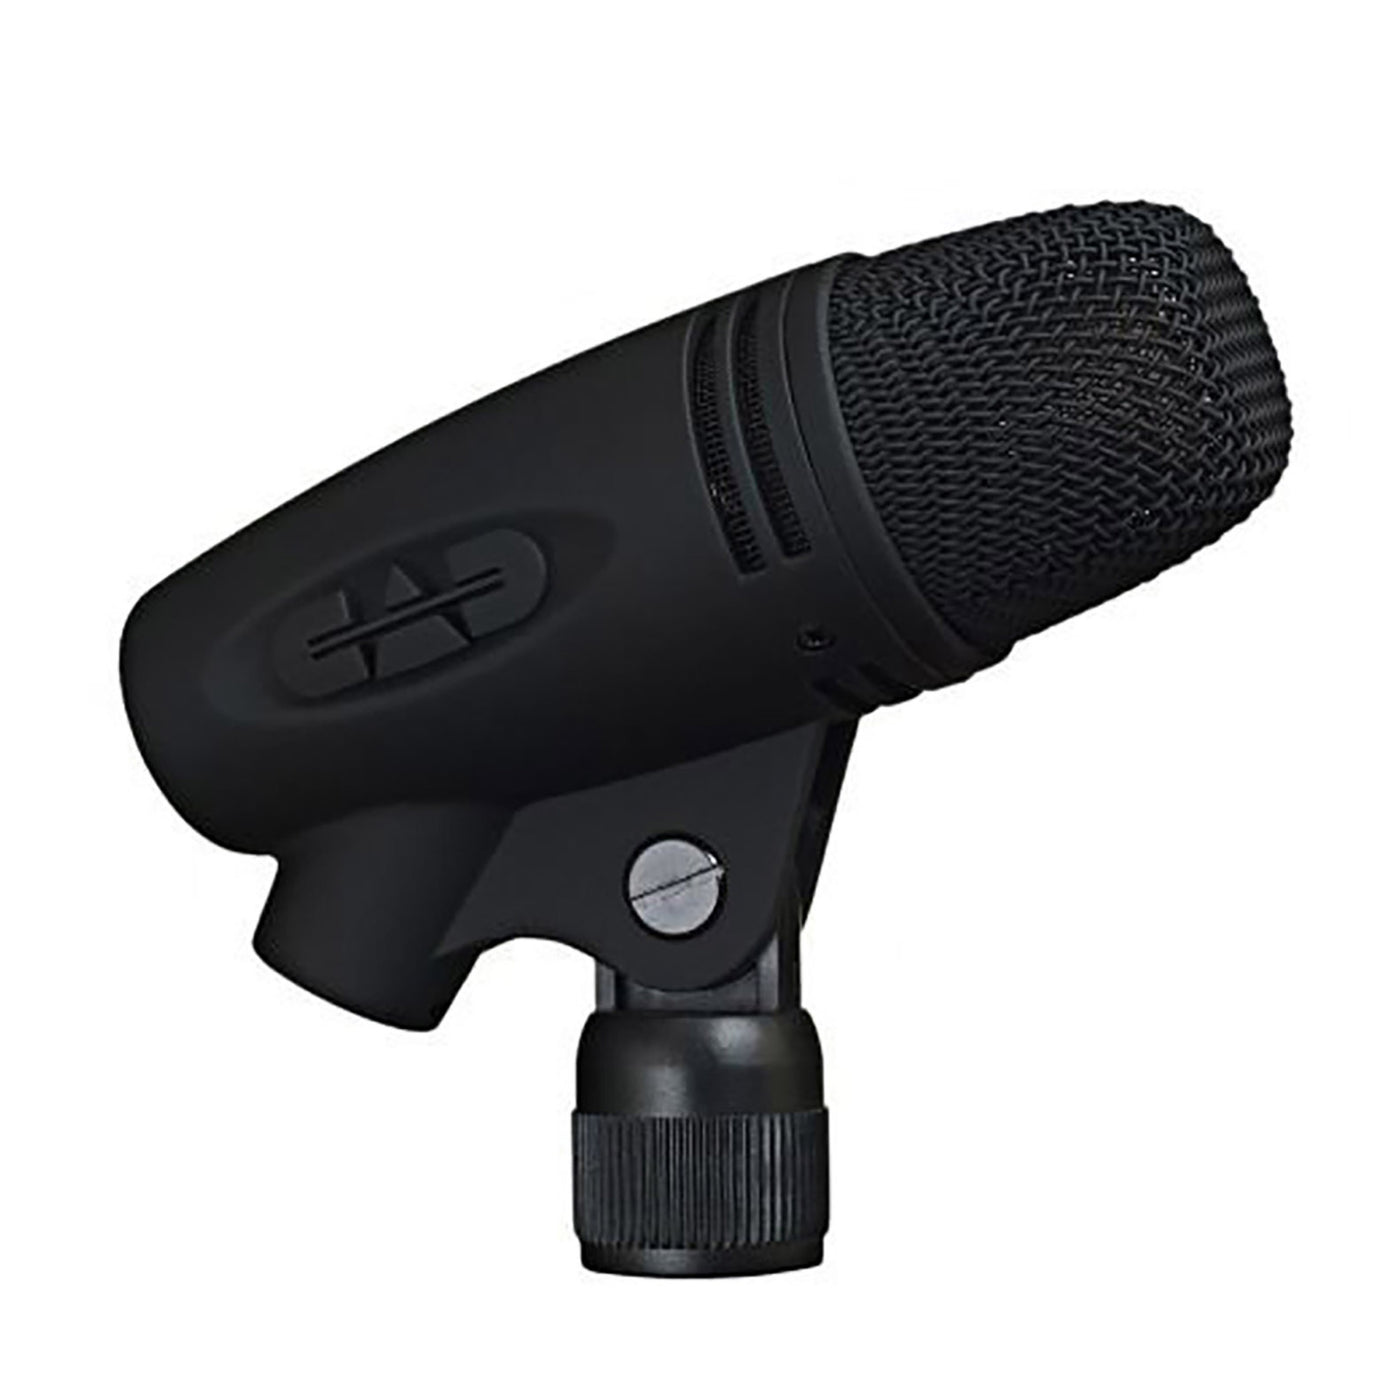 CAD Audio E60 Equitek Small Diaphragm Cardioid Condenser Microphone (E60)